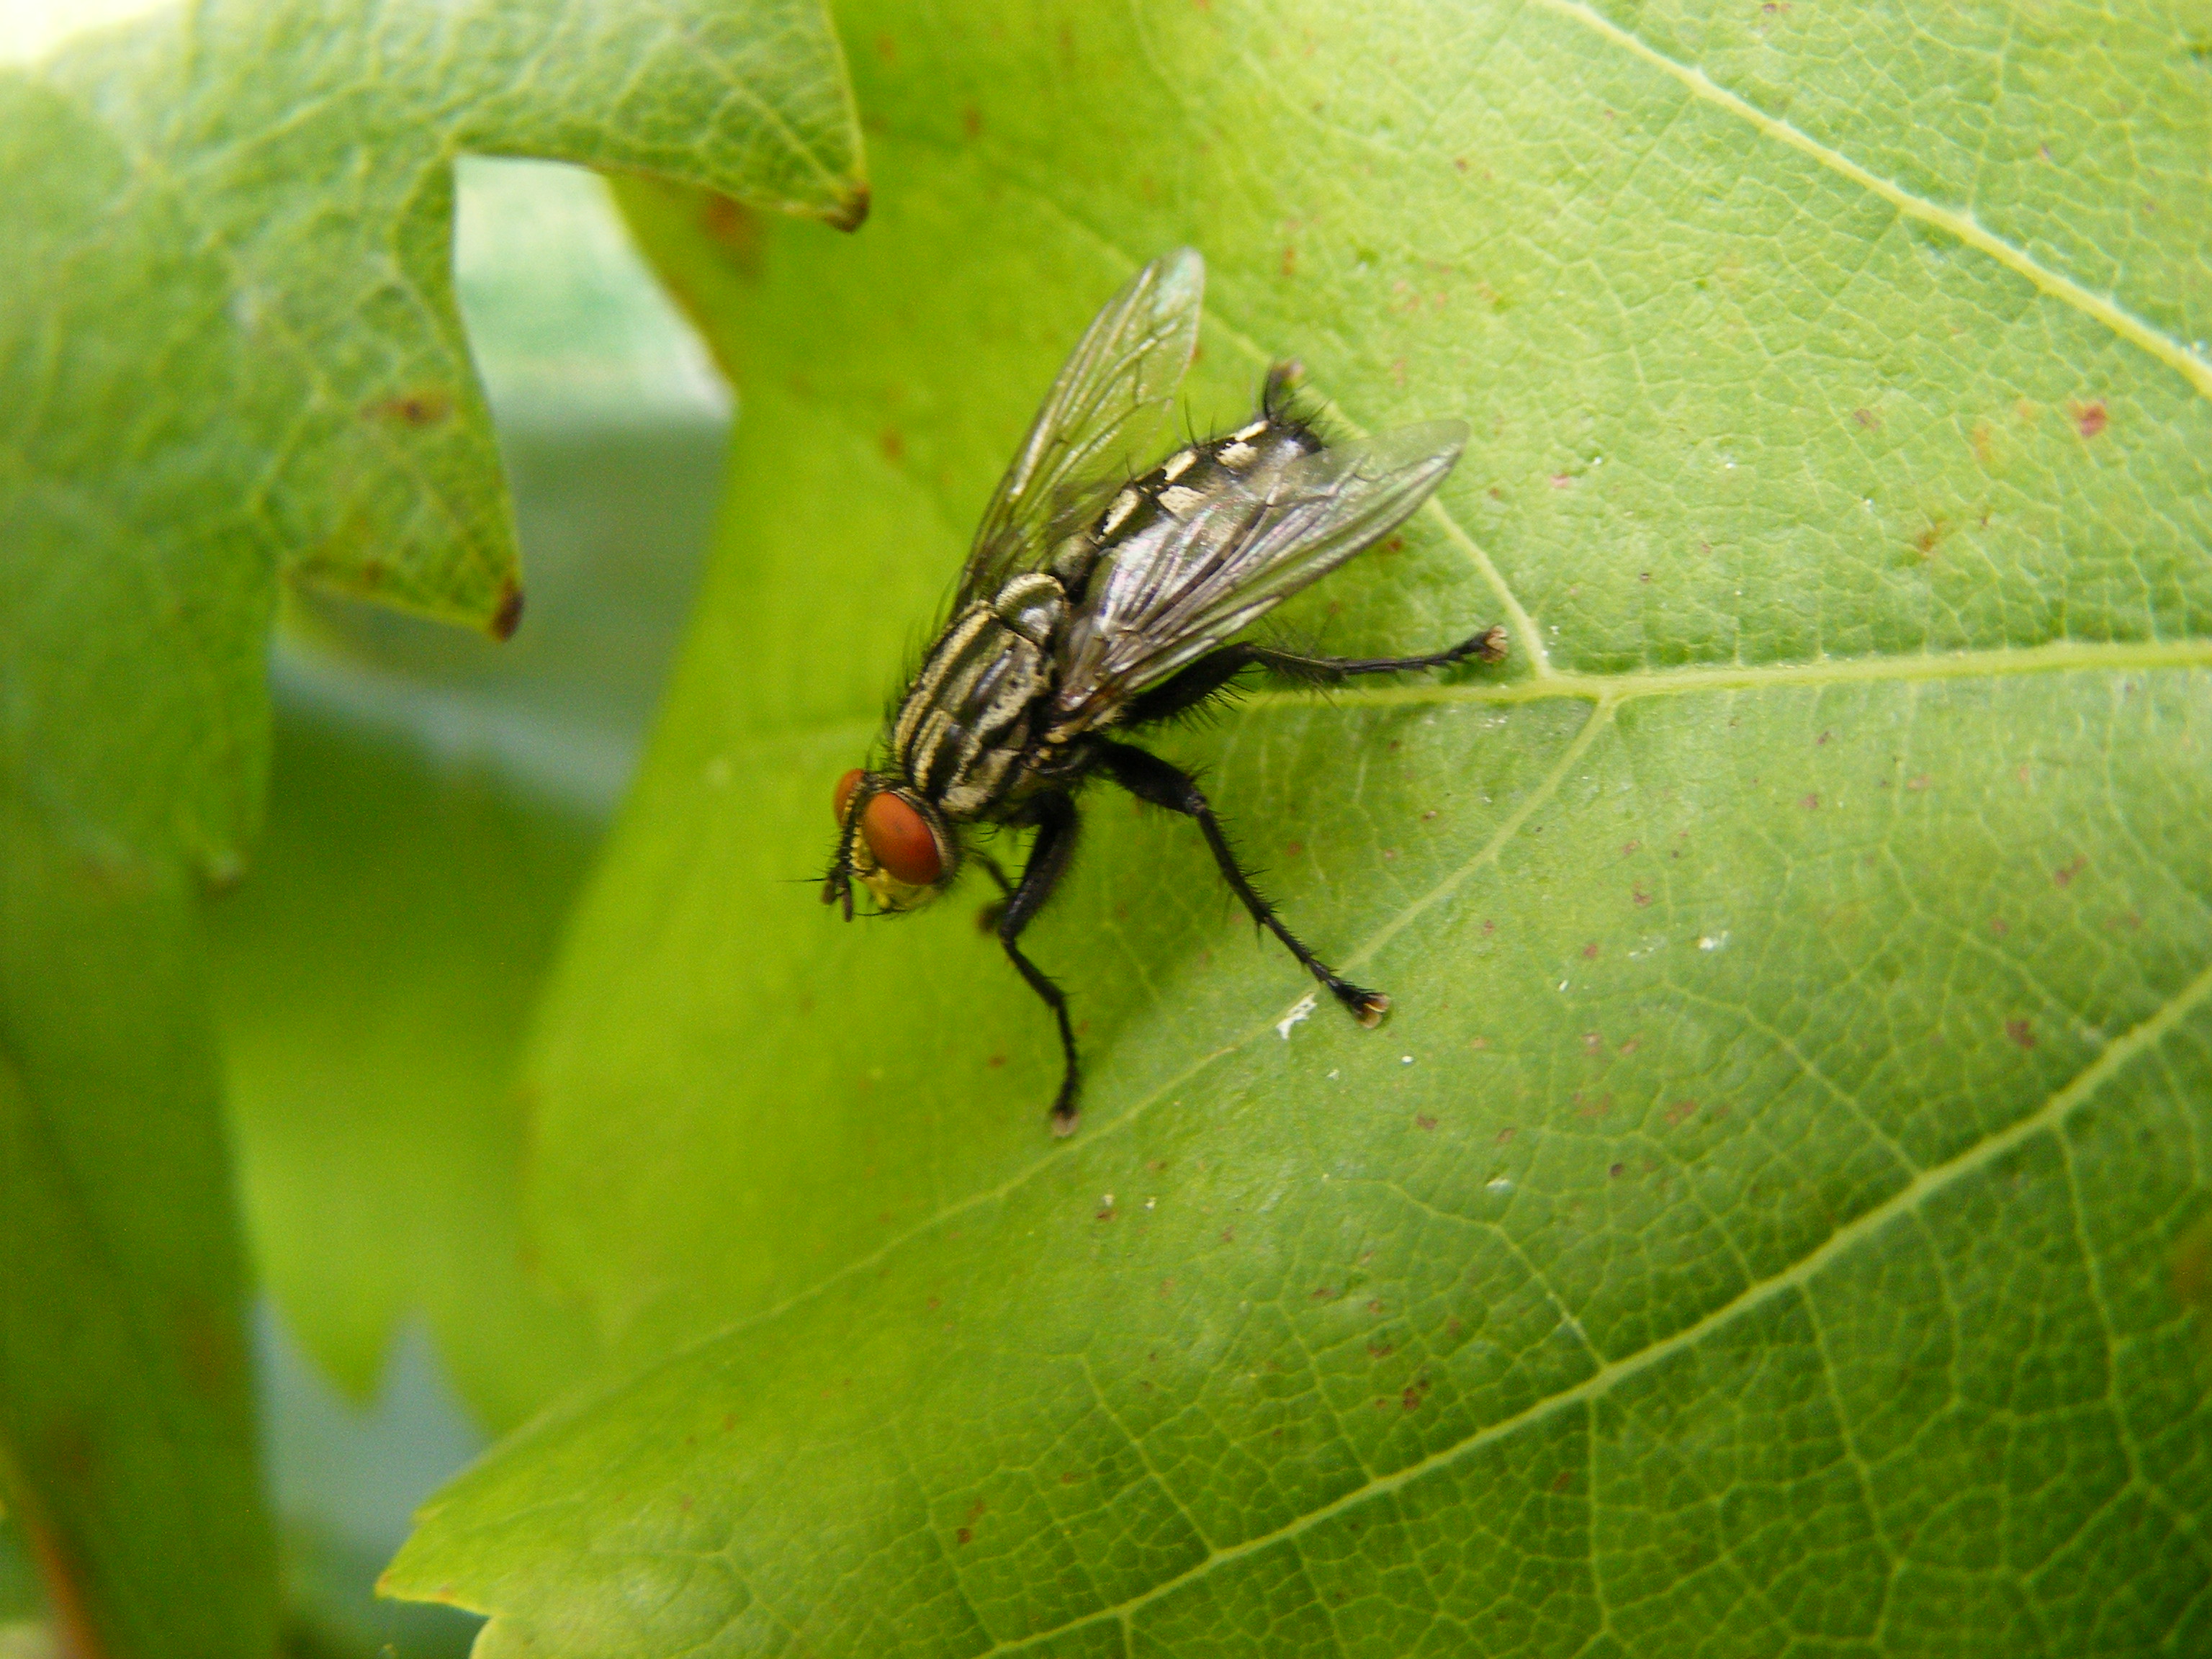 File:Fly on leaf.jpg - Wikimedia Commons